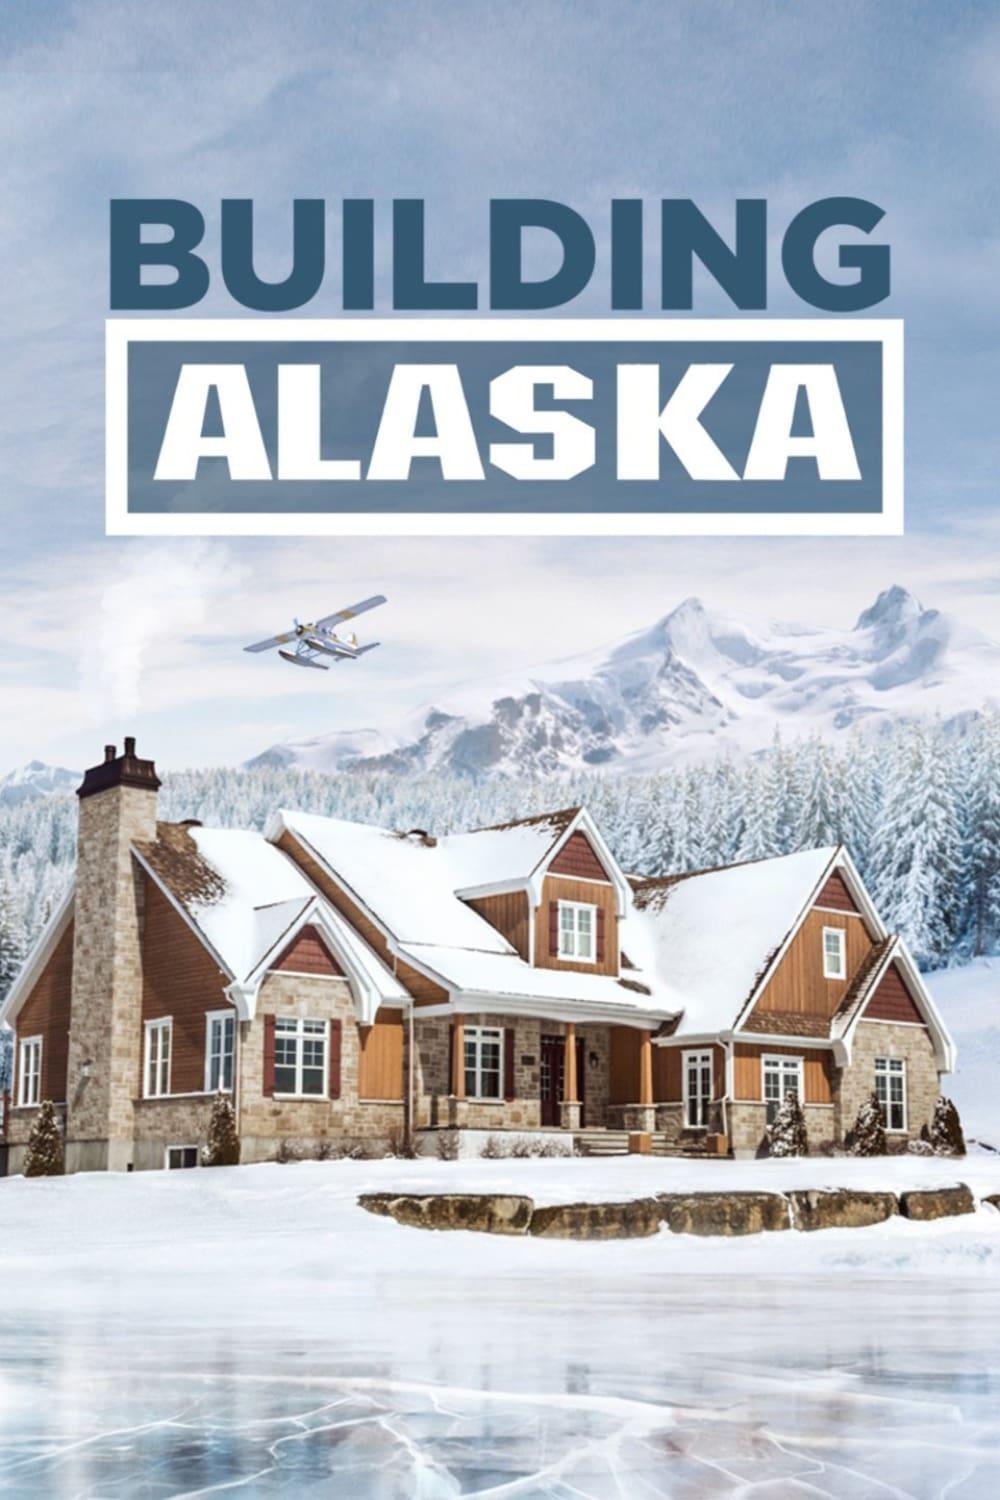 Building Alaska poster